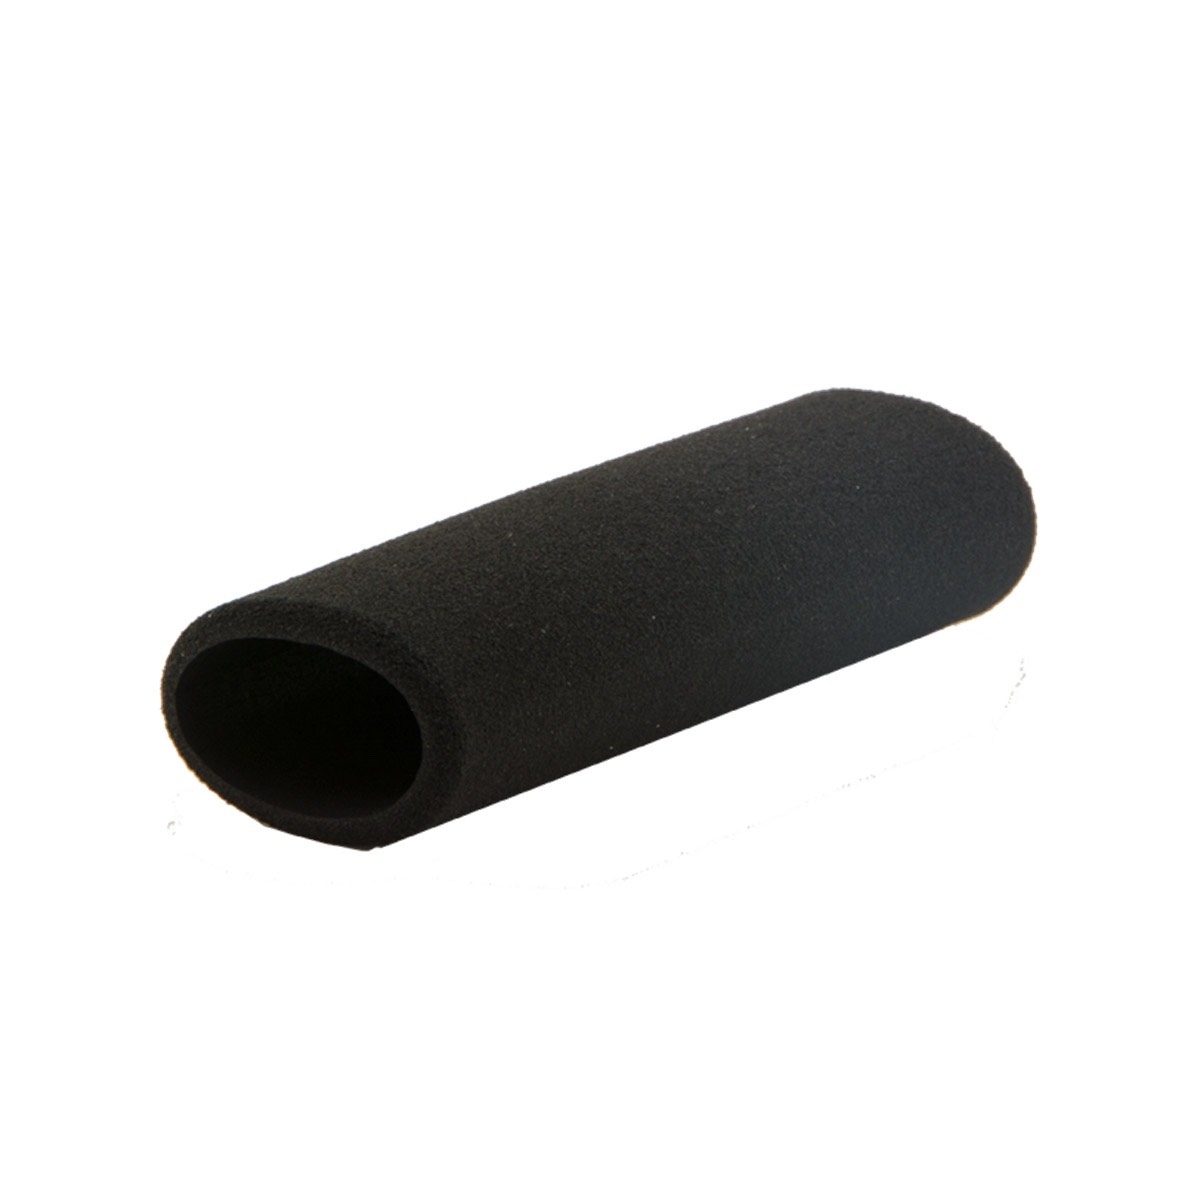 8005-0043, Handle Grip Foam for E-TRAC